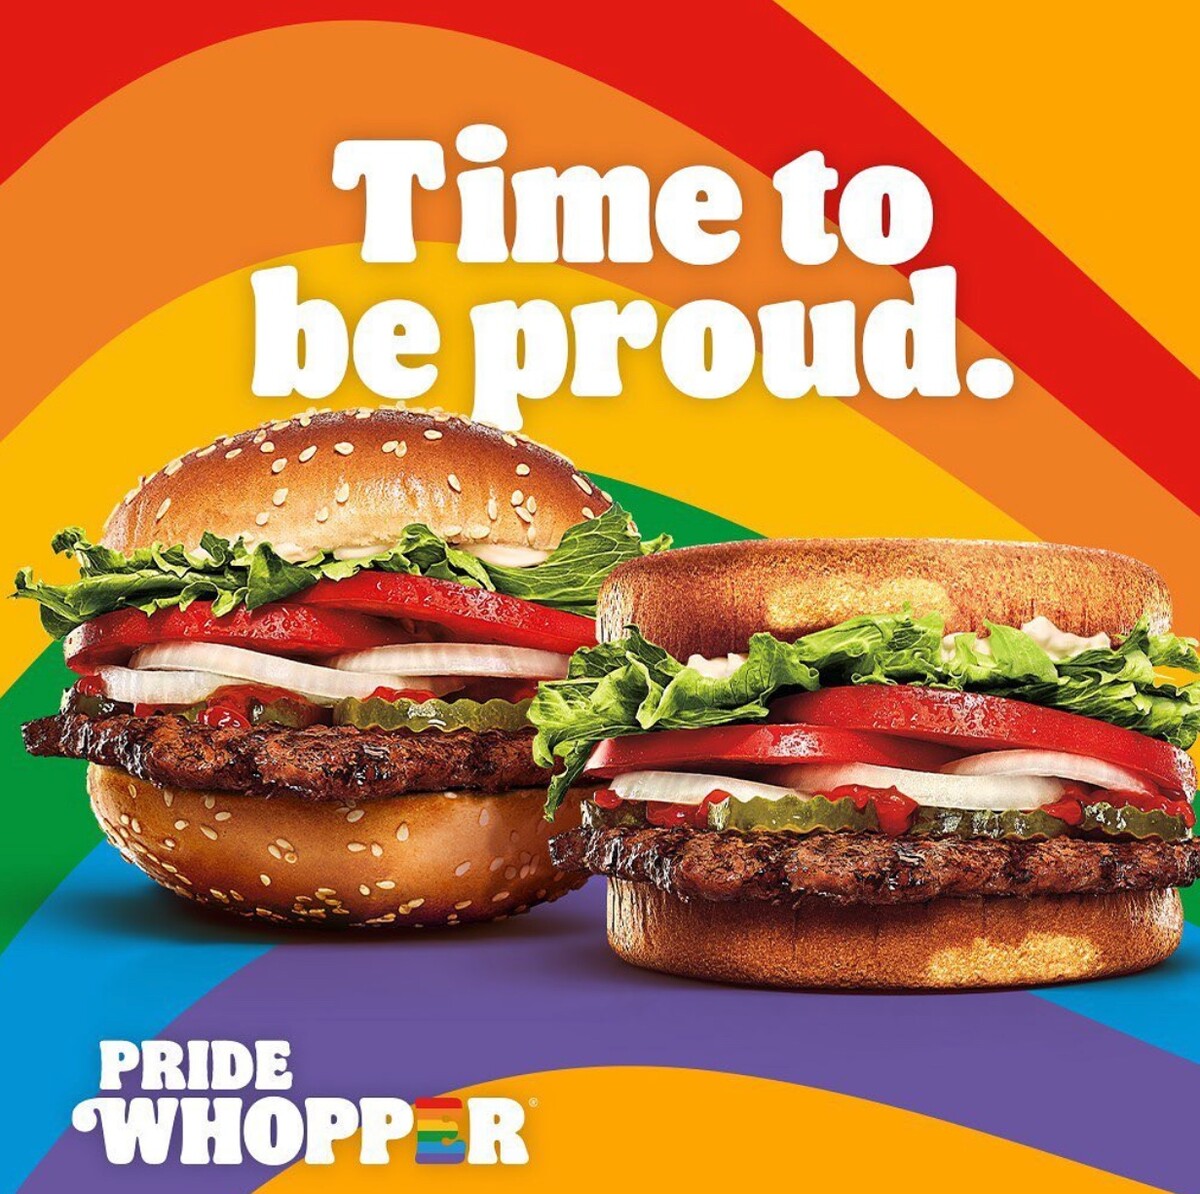 burger king pride